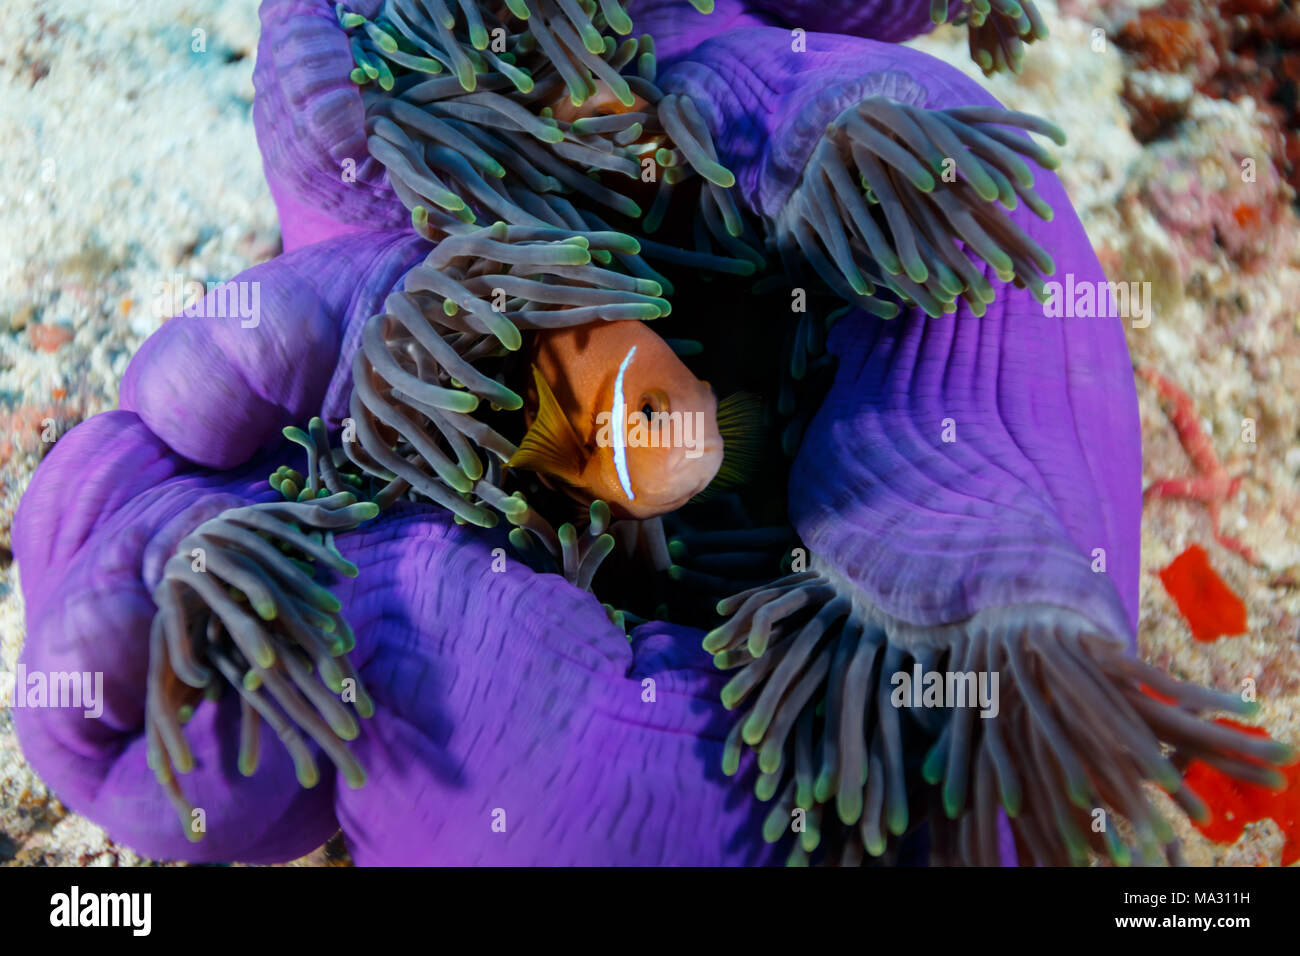 El pez payaso , anemonefish, ocultando en gigante púrpura fluorescente anémona de mar, cnidaria gigantea Foto de stock